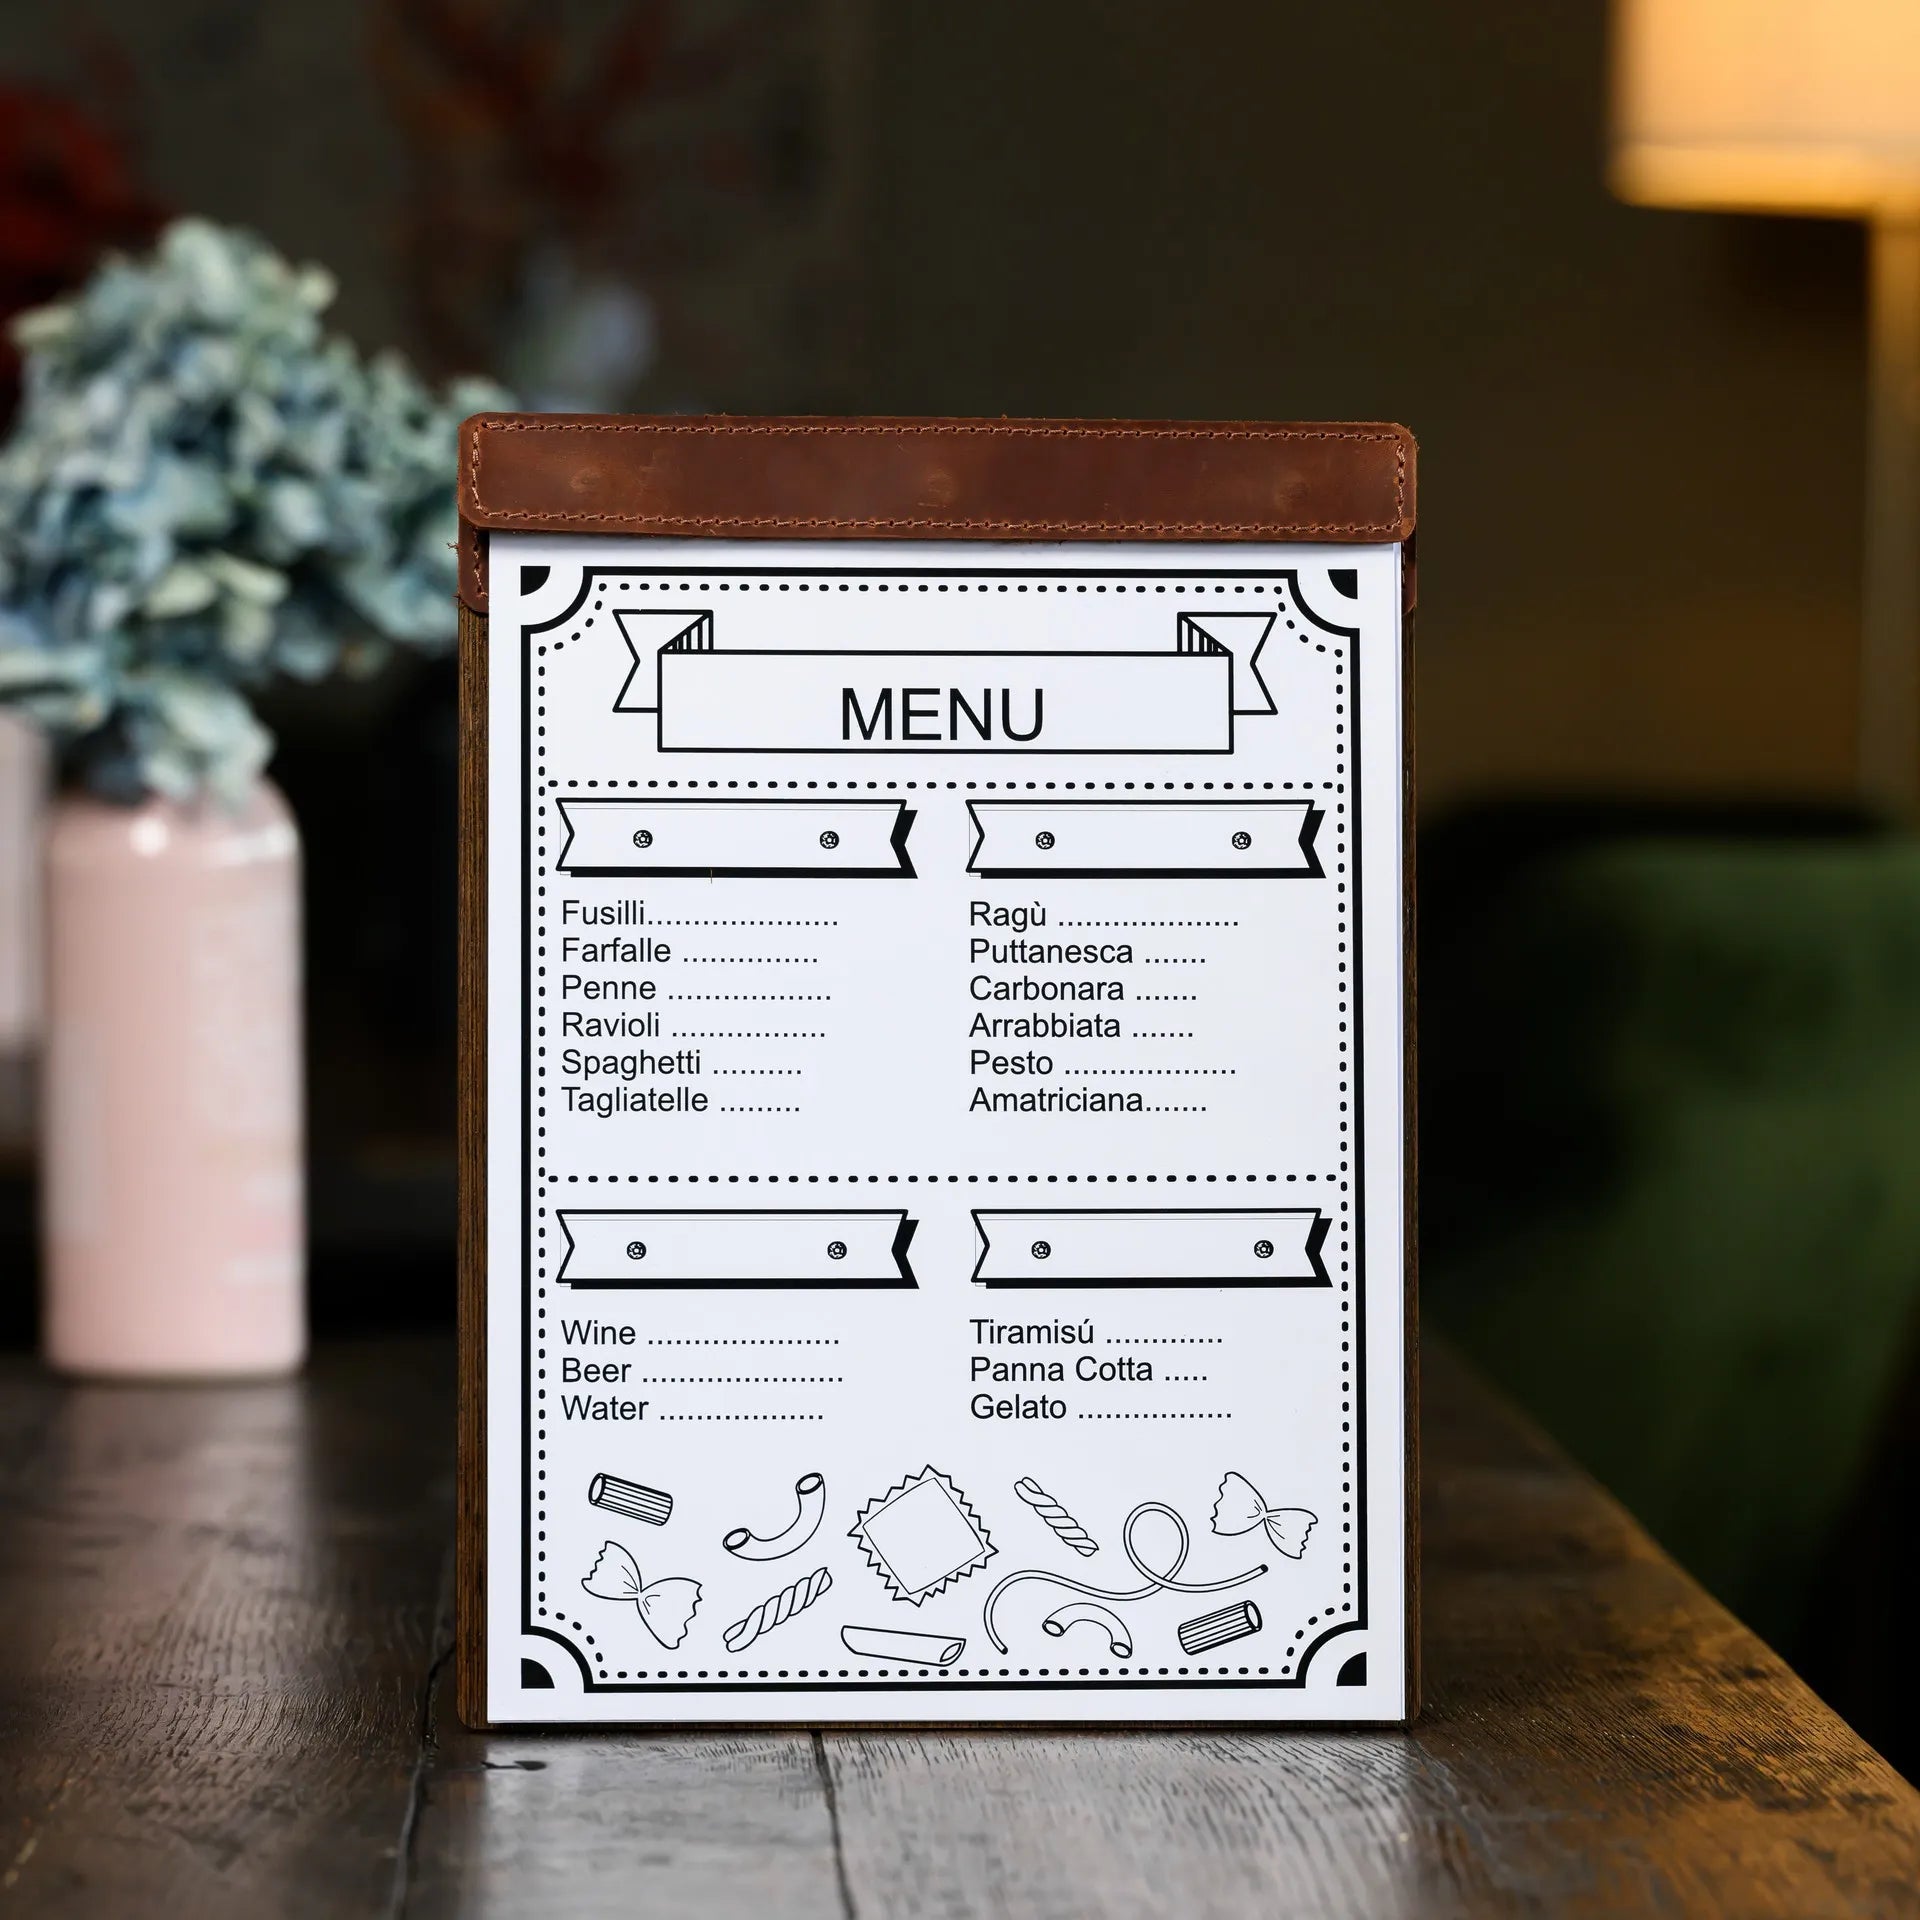 Sleek Veenered HDF Menu Board: Elegant presentation for your restaurant menus.